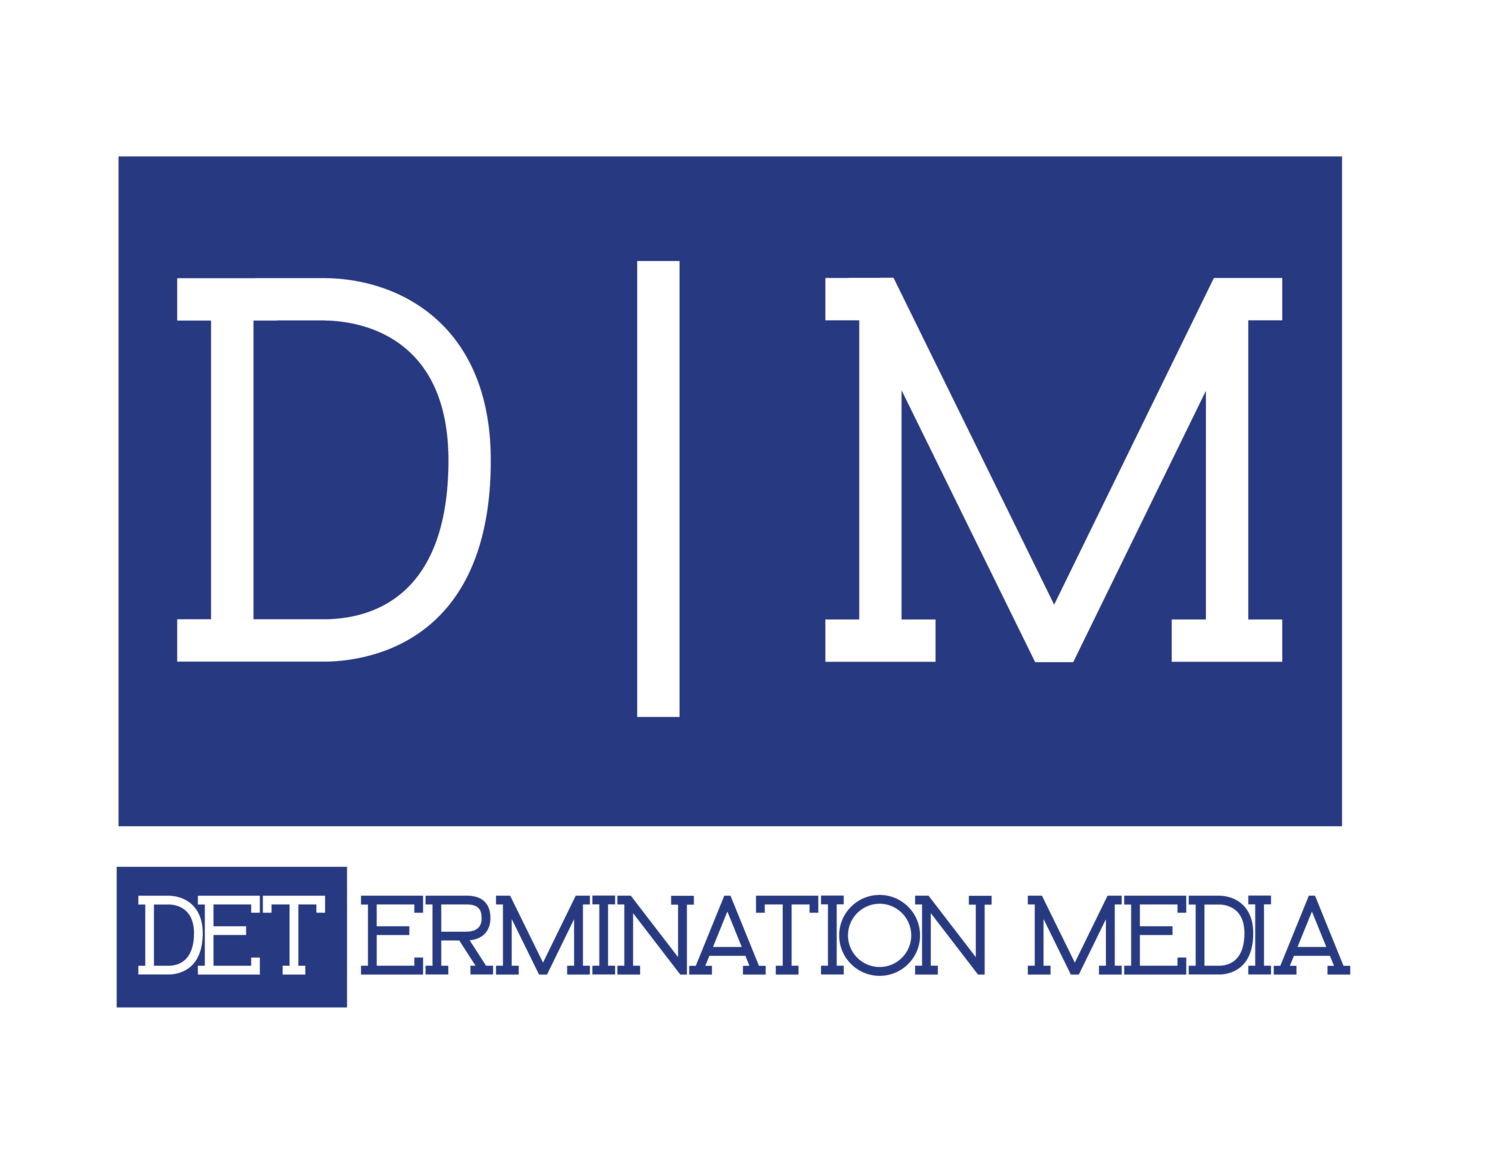 Determination Media